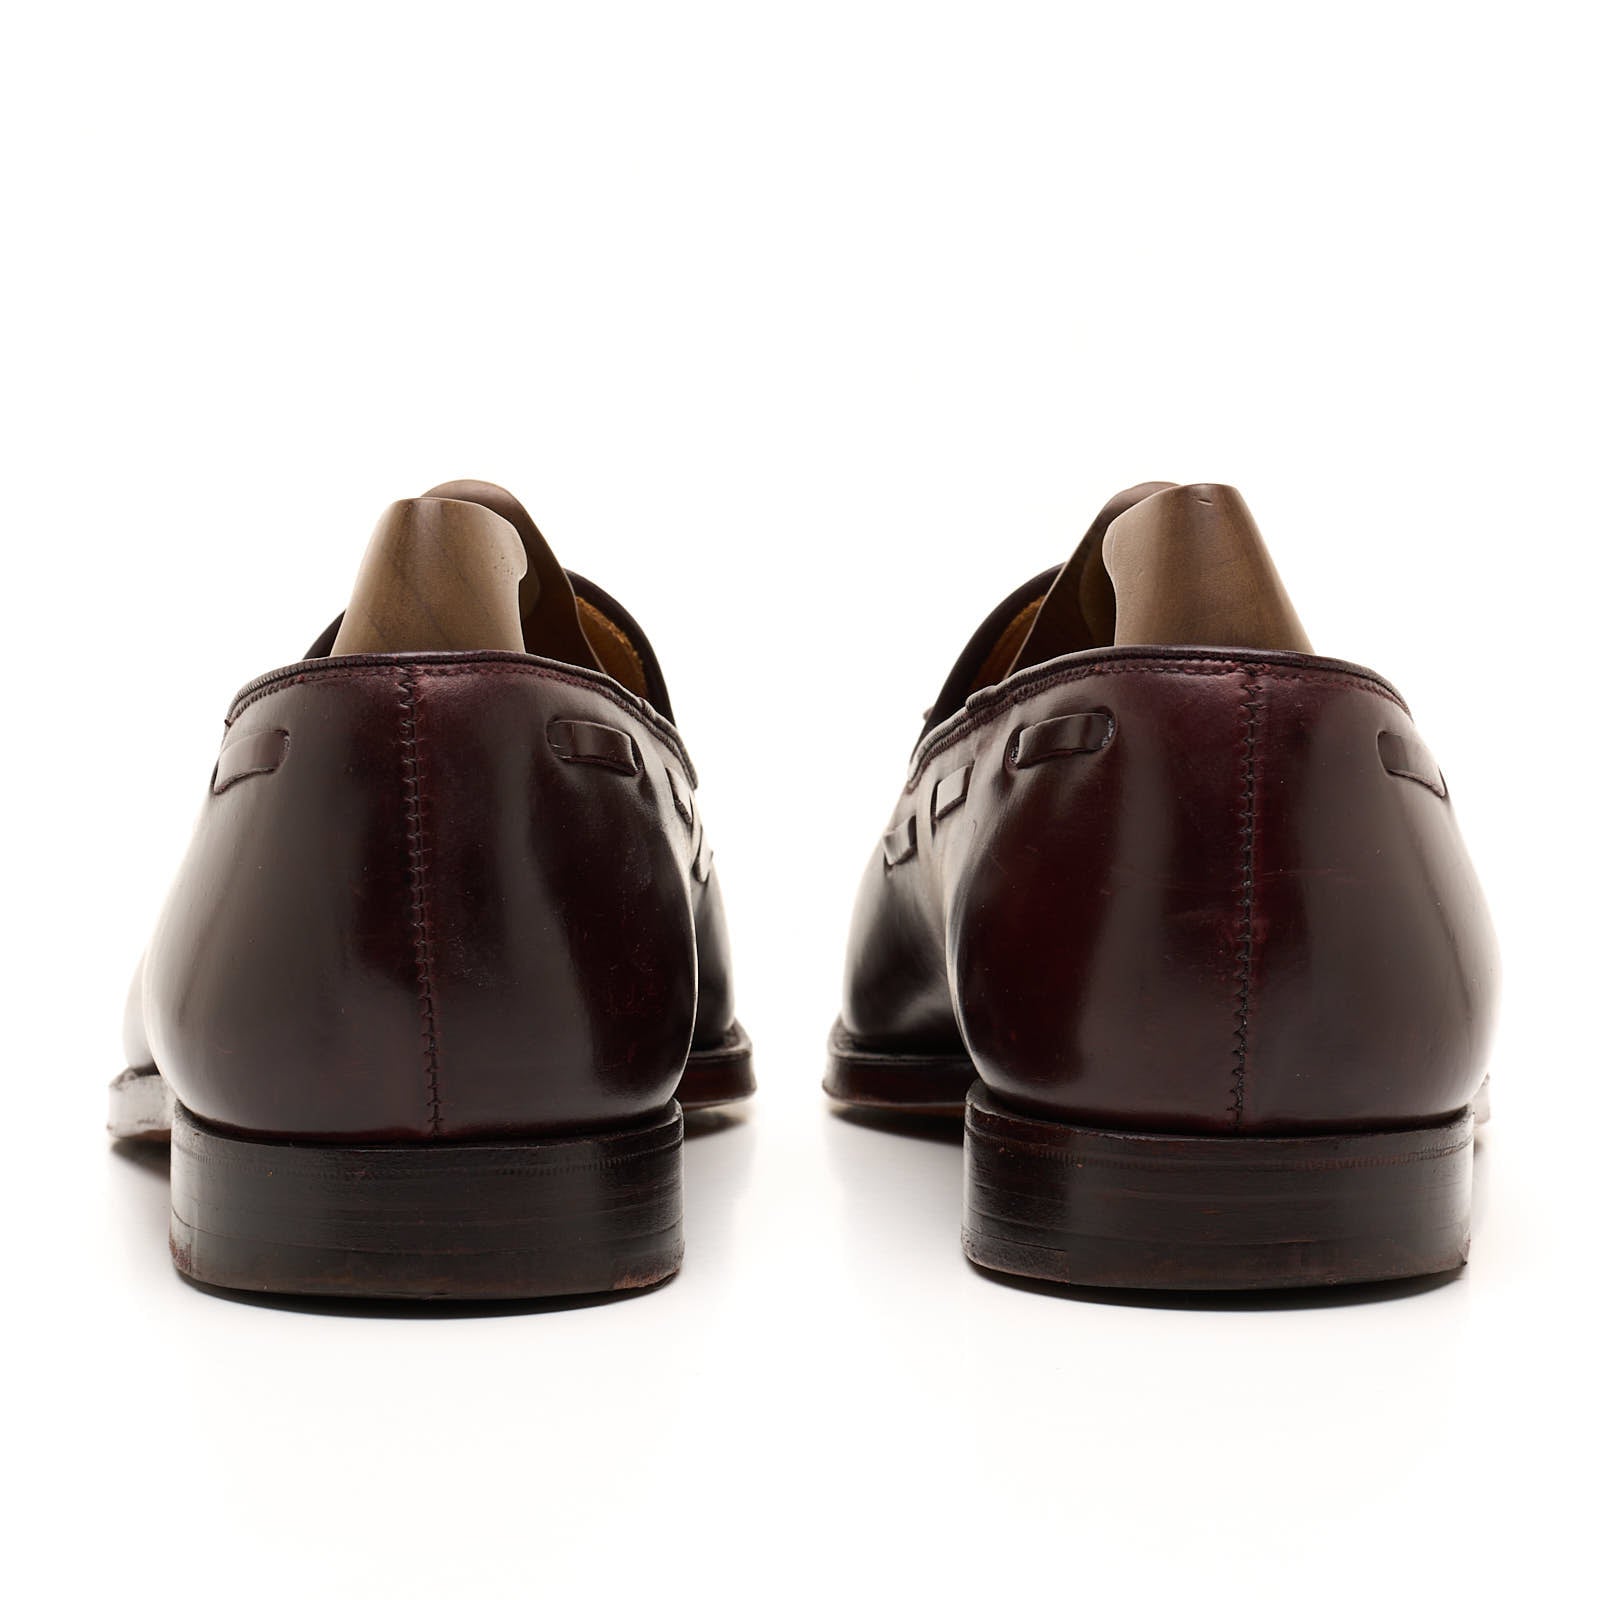 CROCKETT & JONES Cordovan Cavendish 2 Tassel Loafer Shoes UK 8E US 8.5